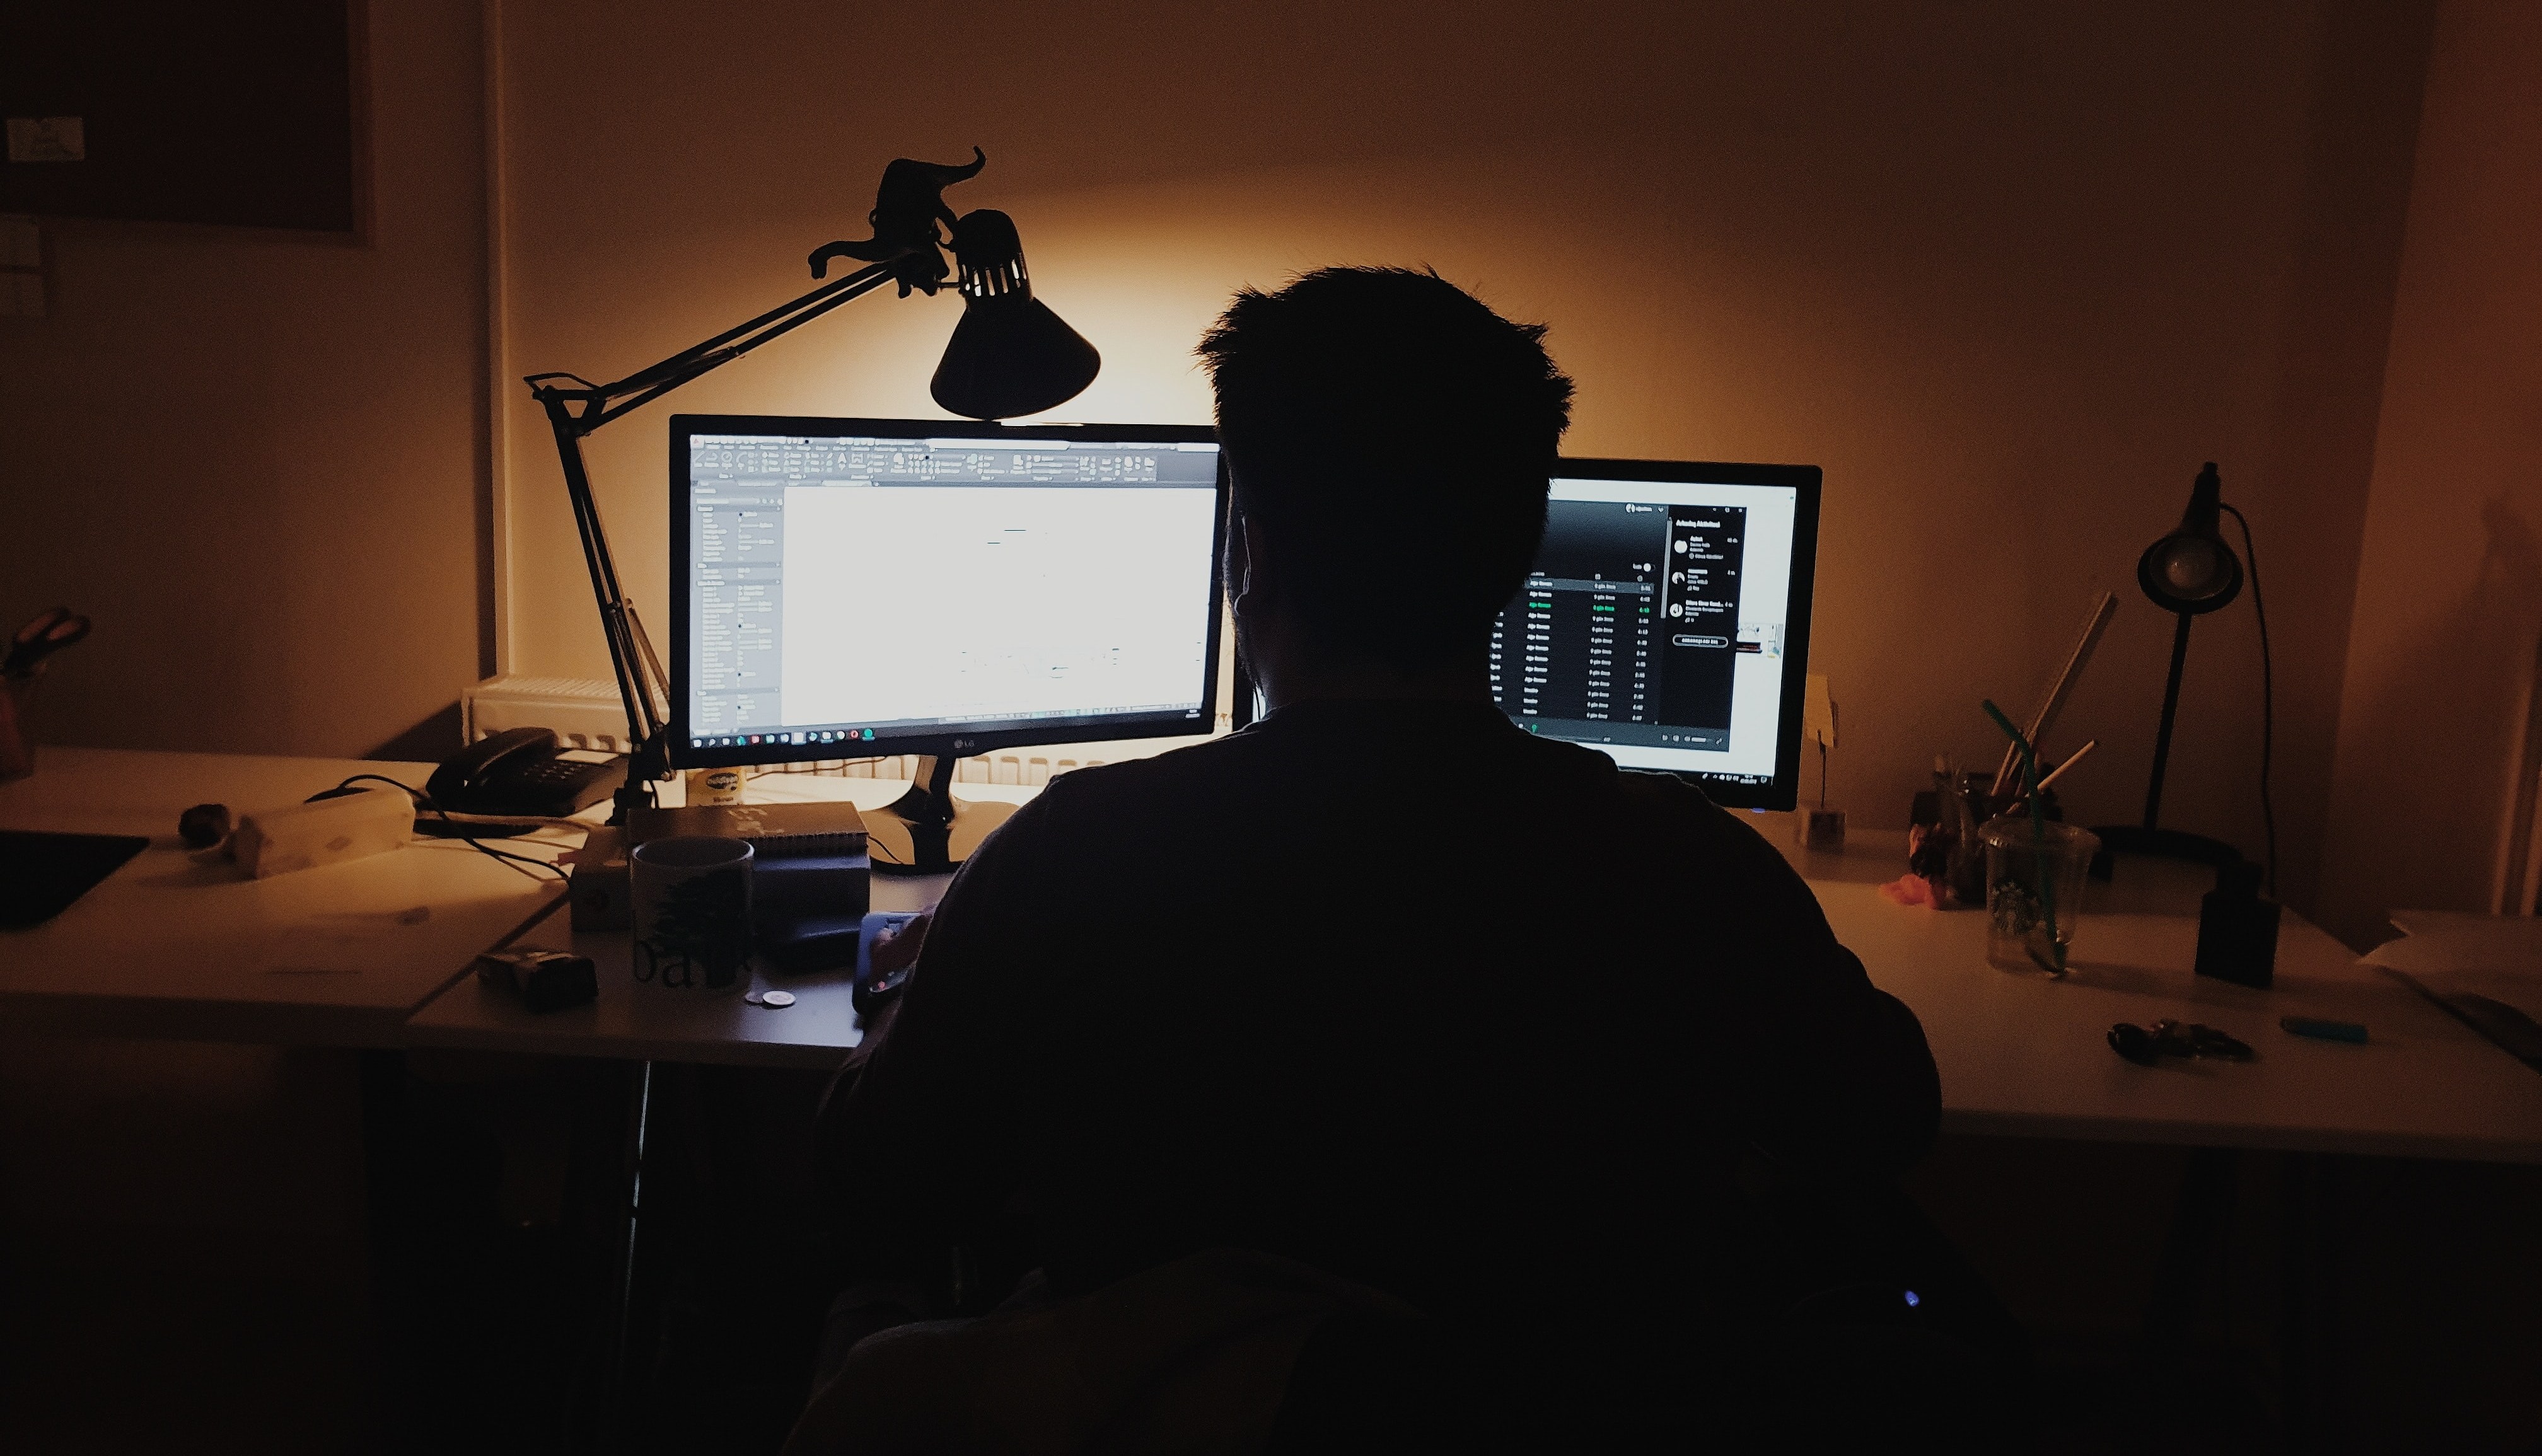 Remote worker with poor desk lighting